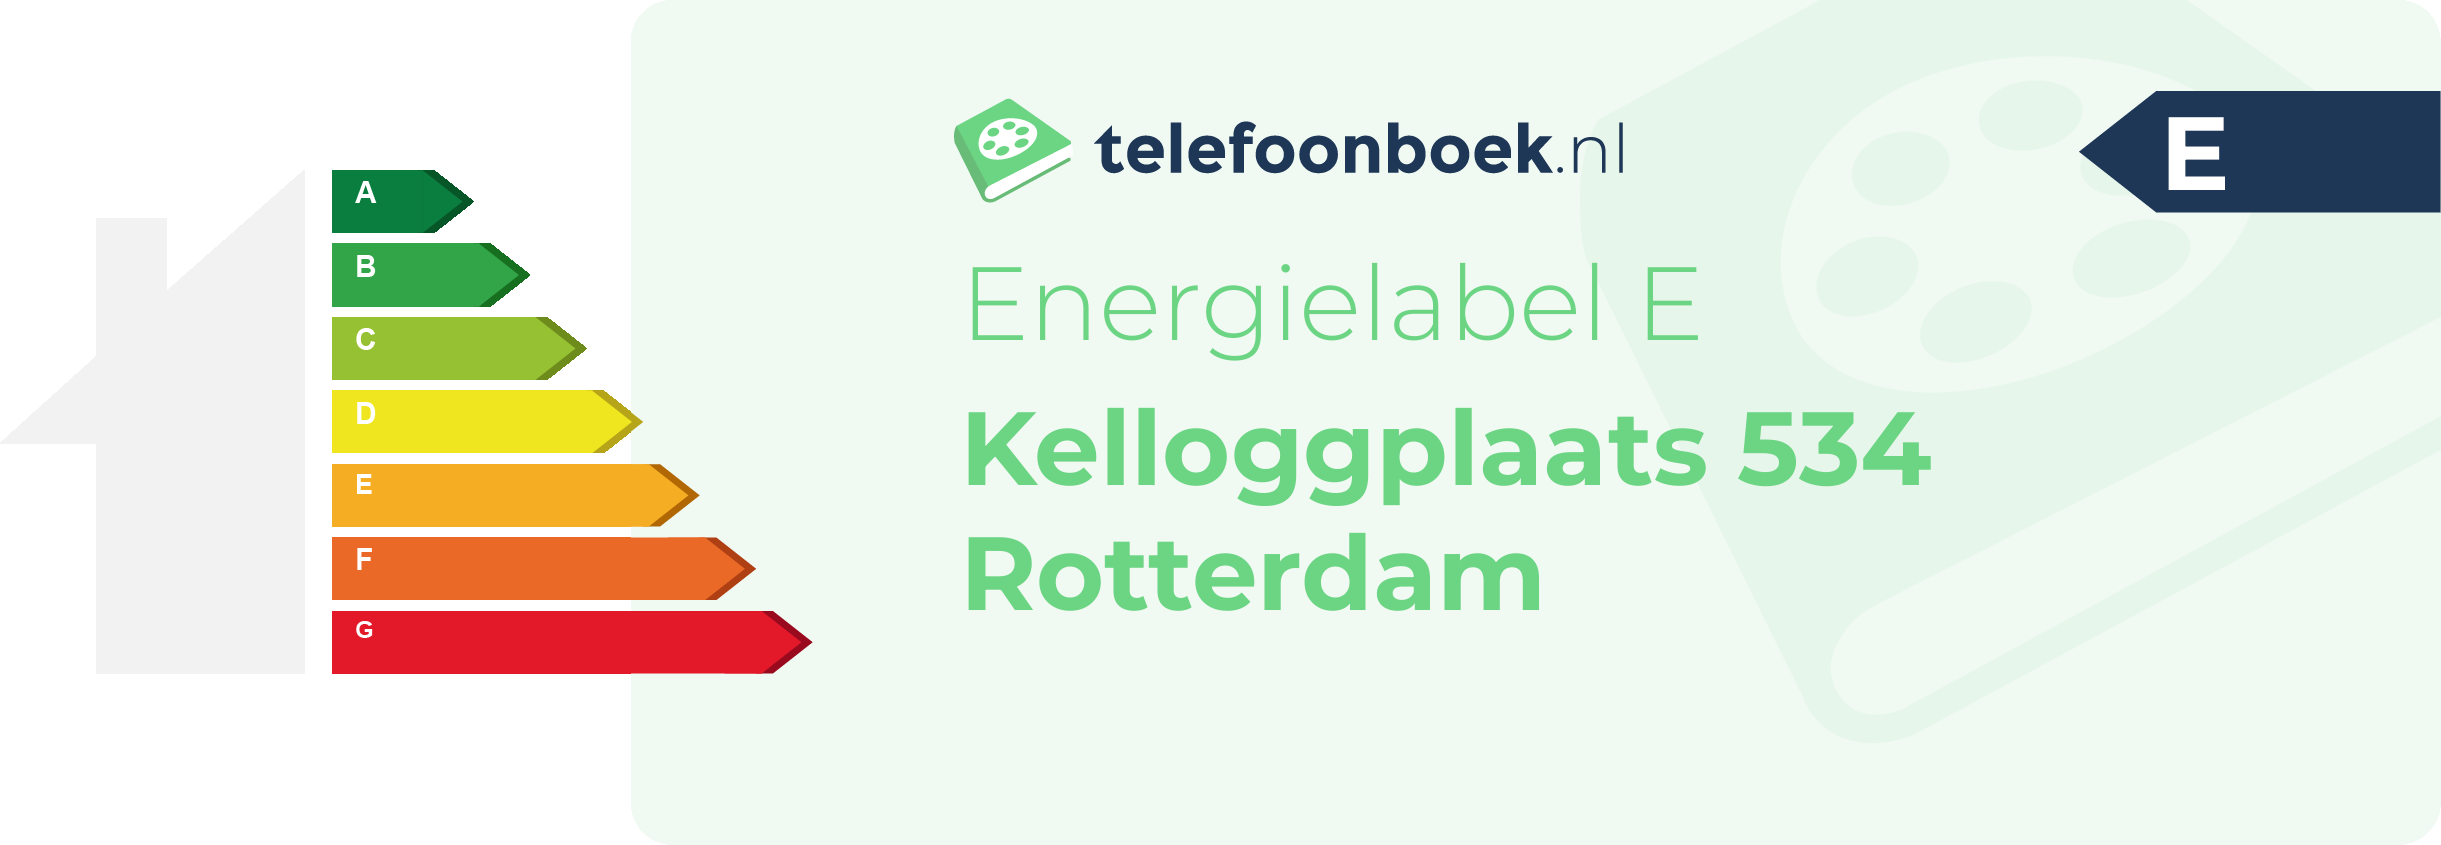 Energielabel Kelloggplaats 534 Rotterdam